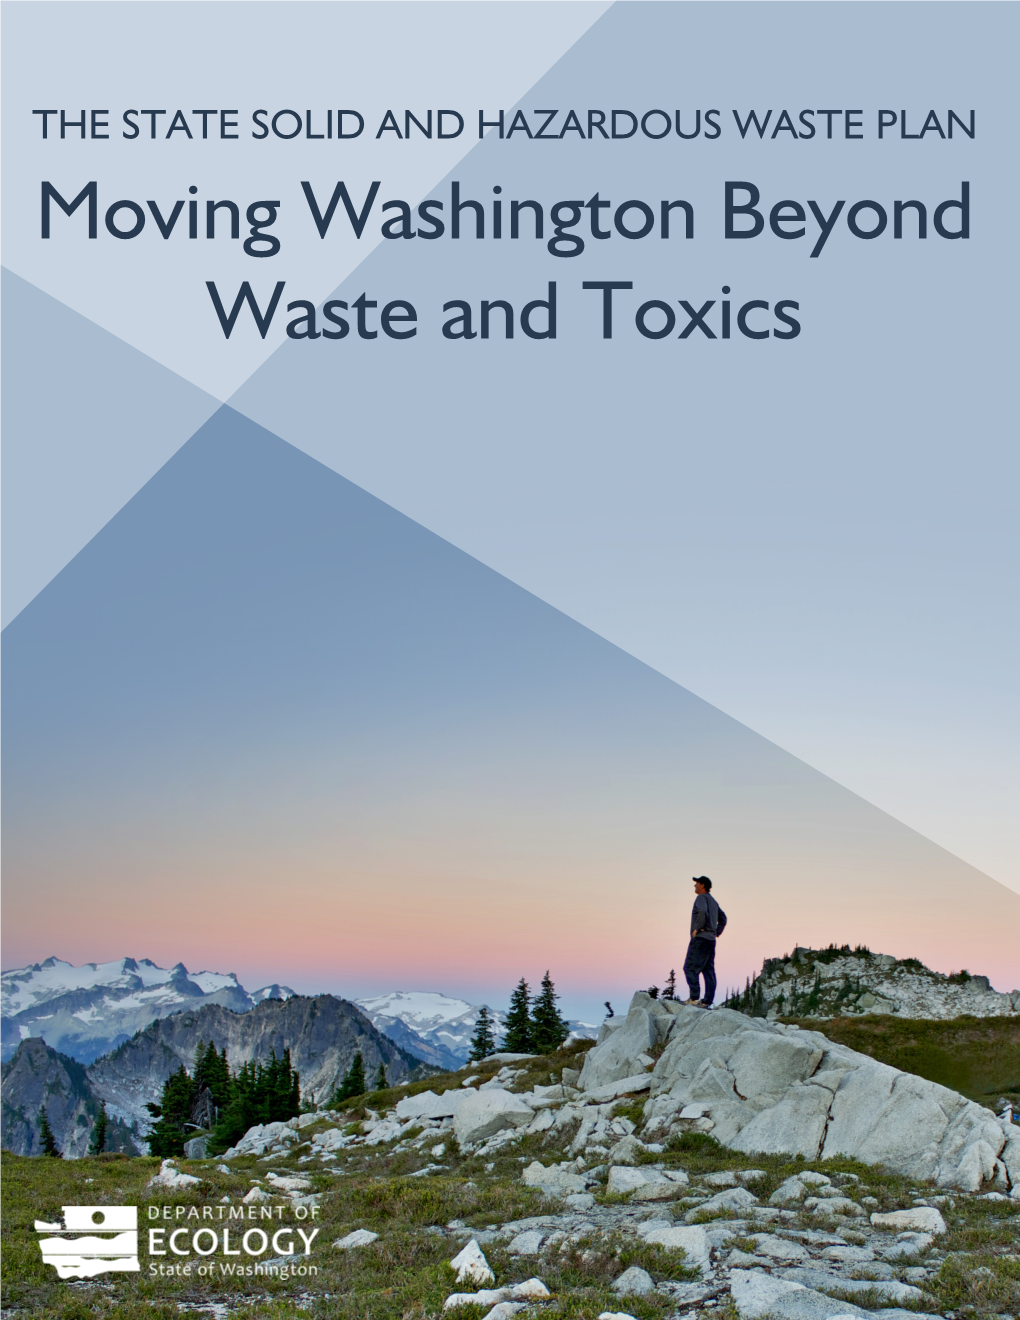 Moving Washington Beyond Waste and Toxics “If We Want the U.S